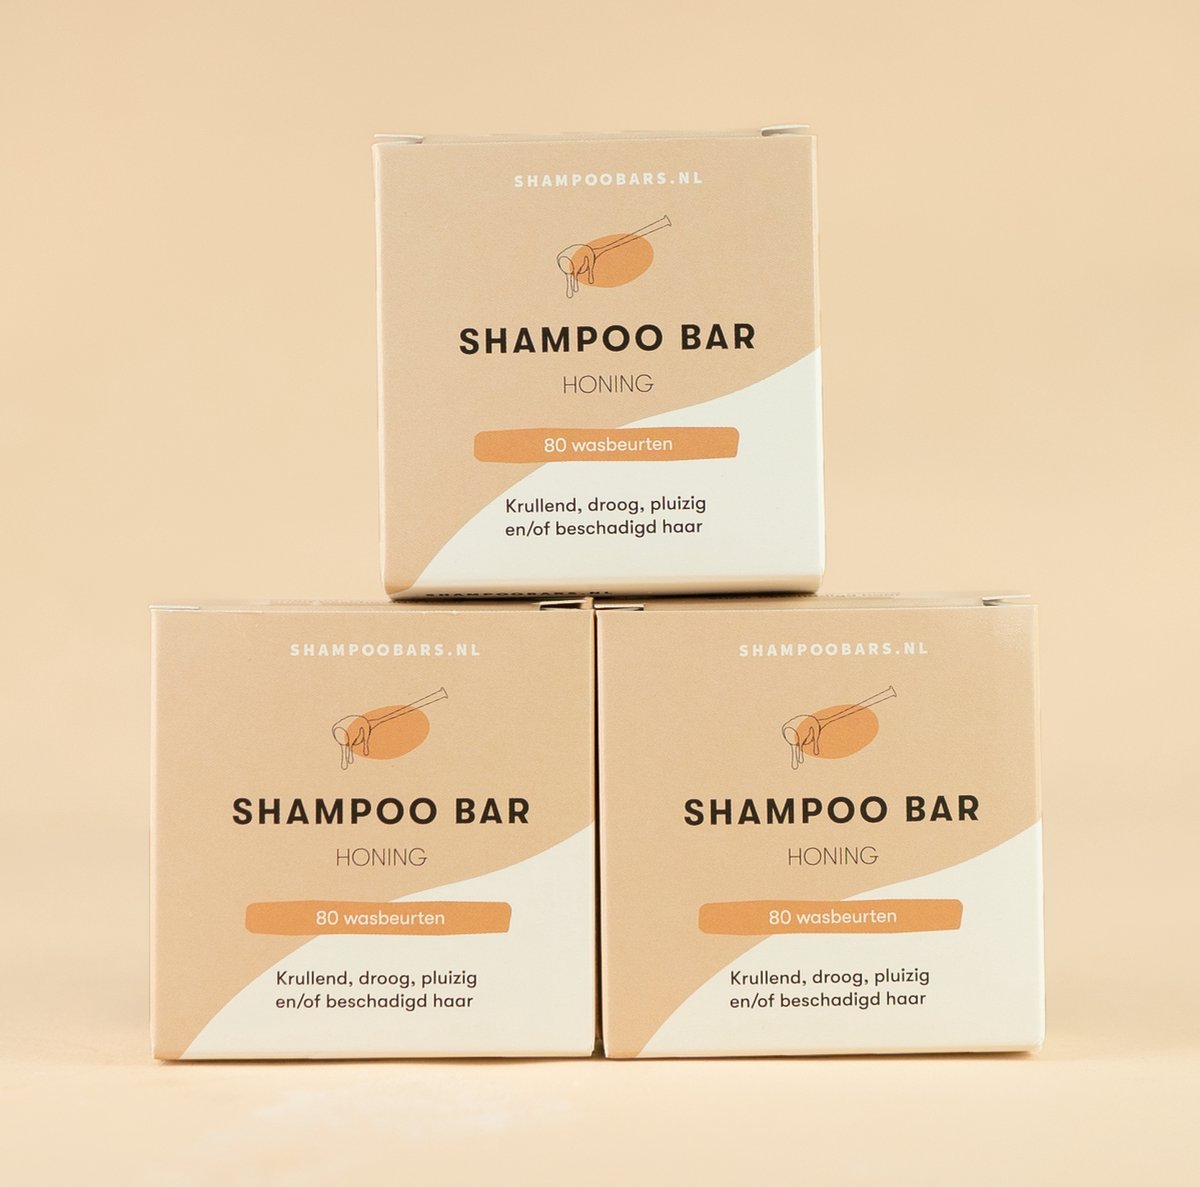 3x Shampoo Bar Honing bundel | Handgemaakt in Nederland | CG-proof | 100% biologisch afbreekbare verpakking